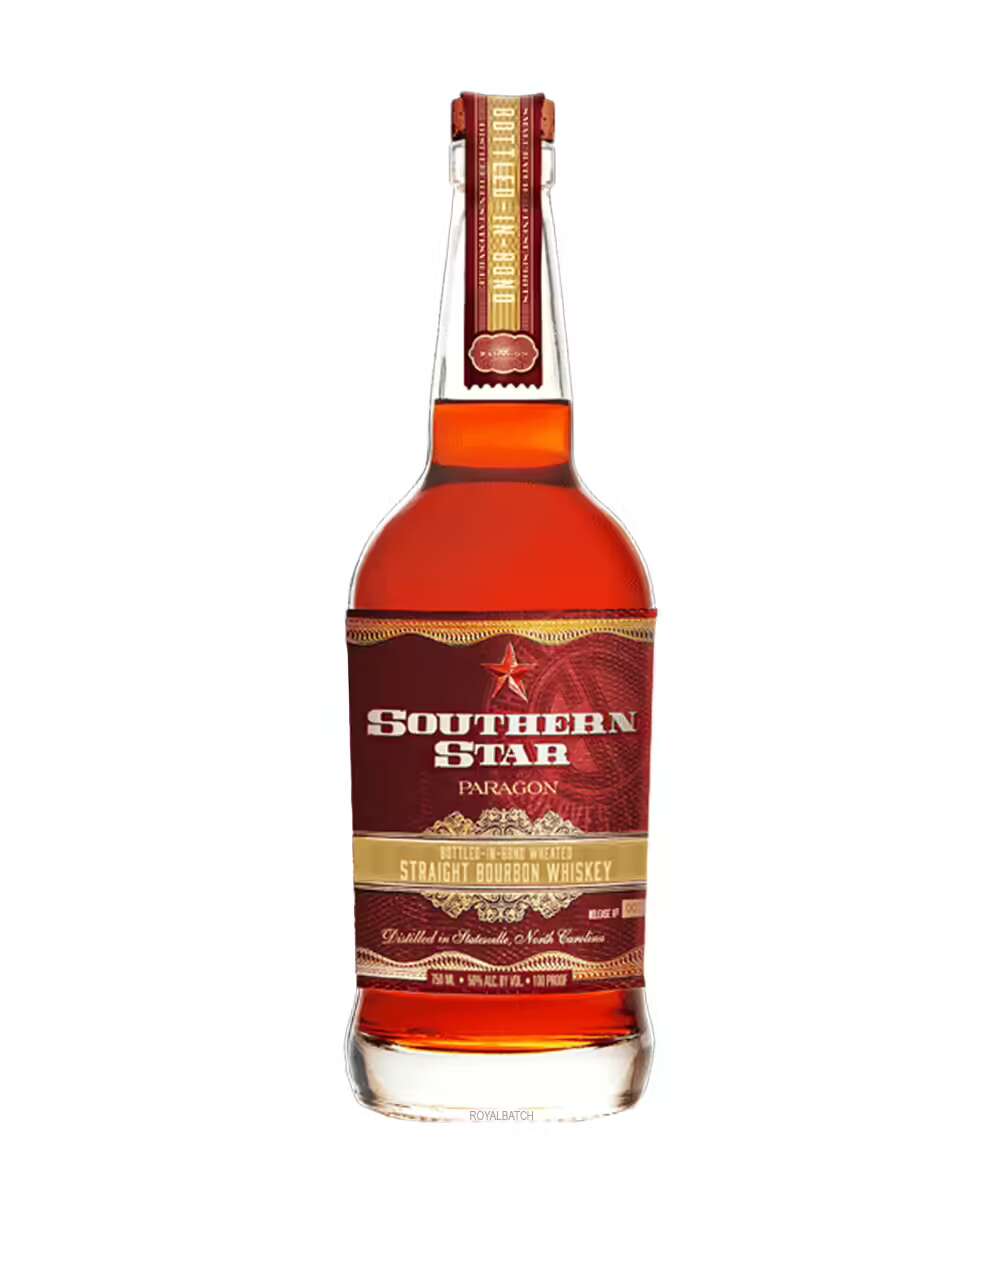 Southern Star Paragon Bottled in Bond Bourbon Whiskey